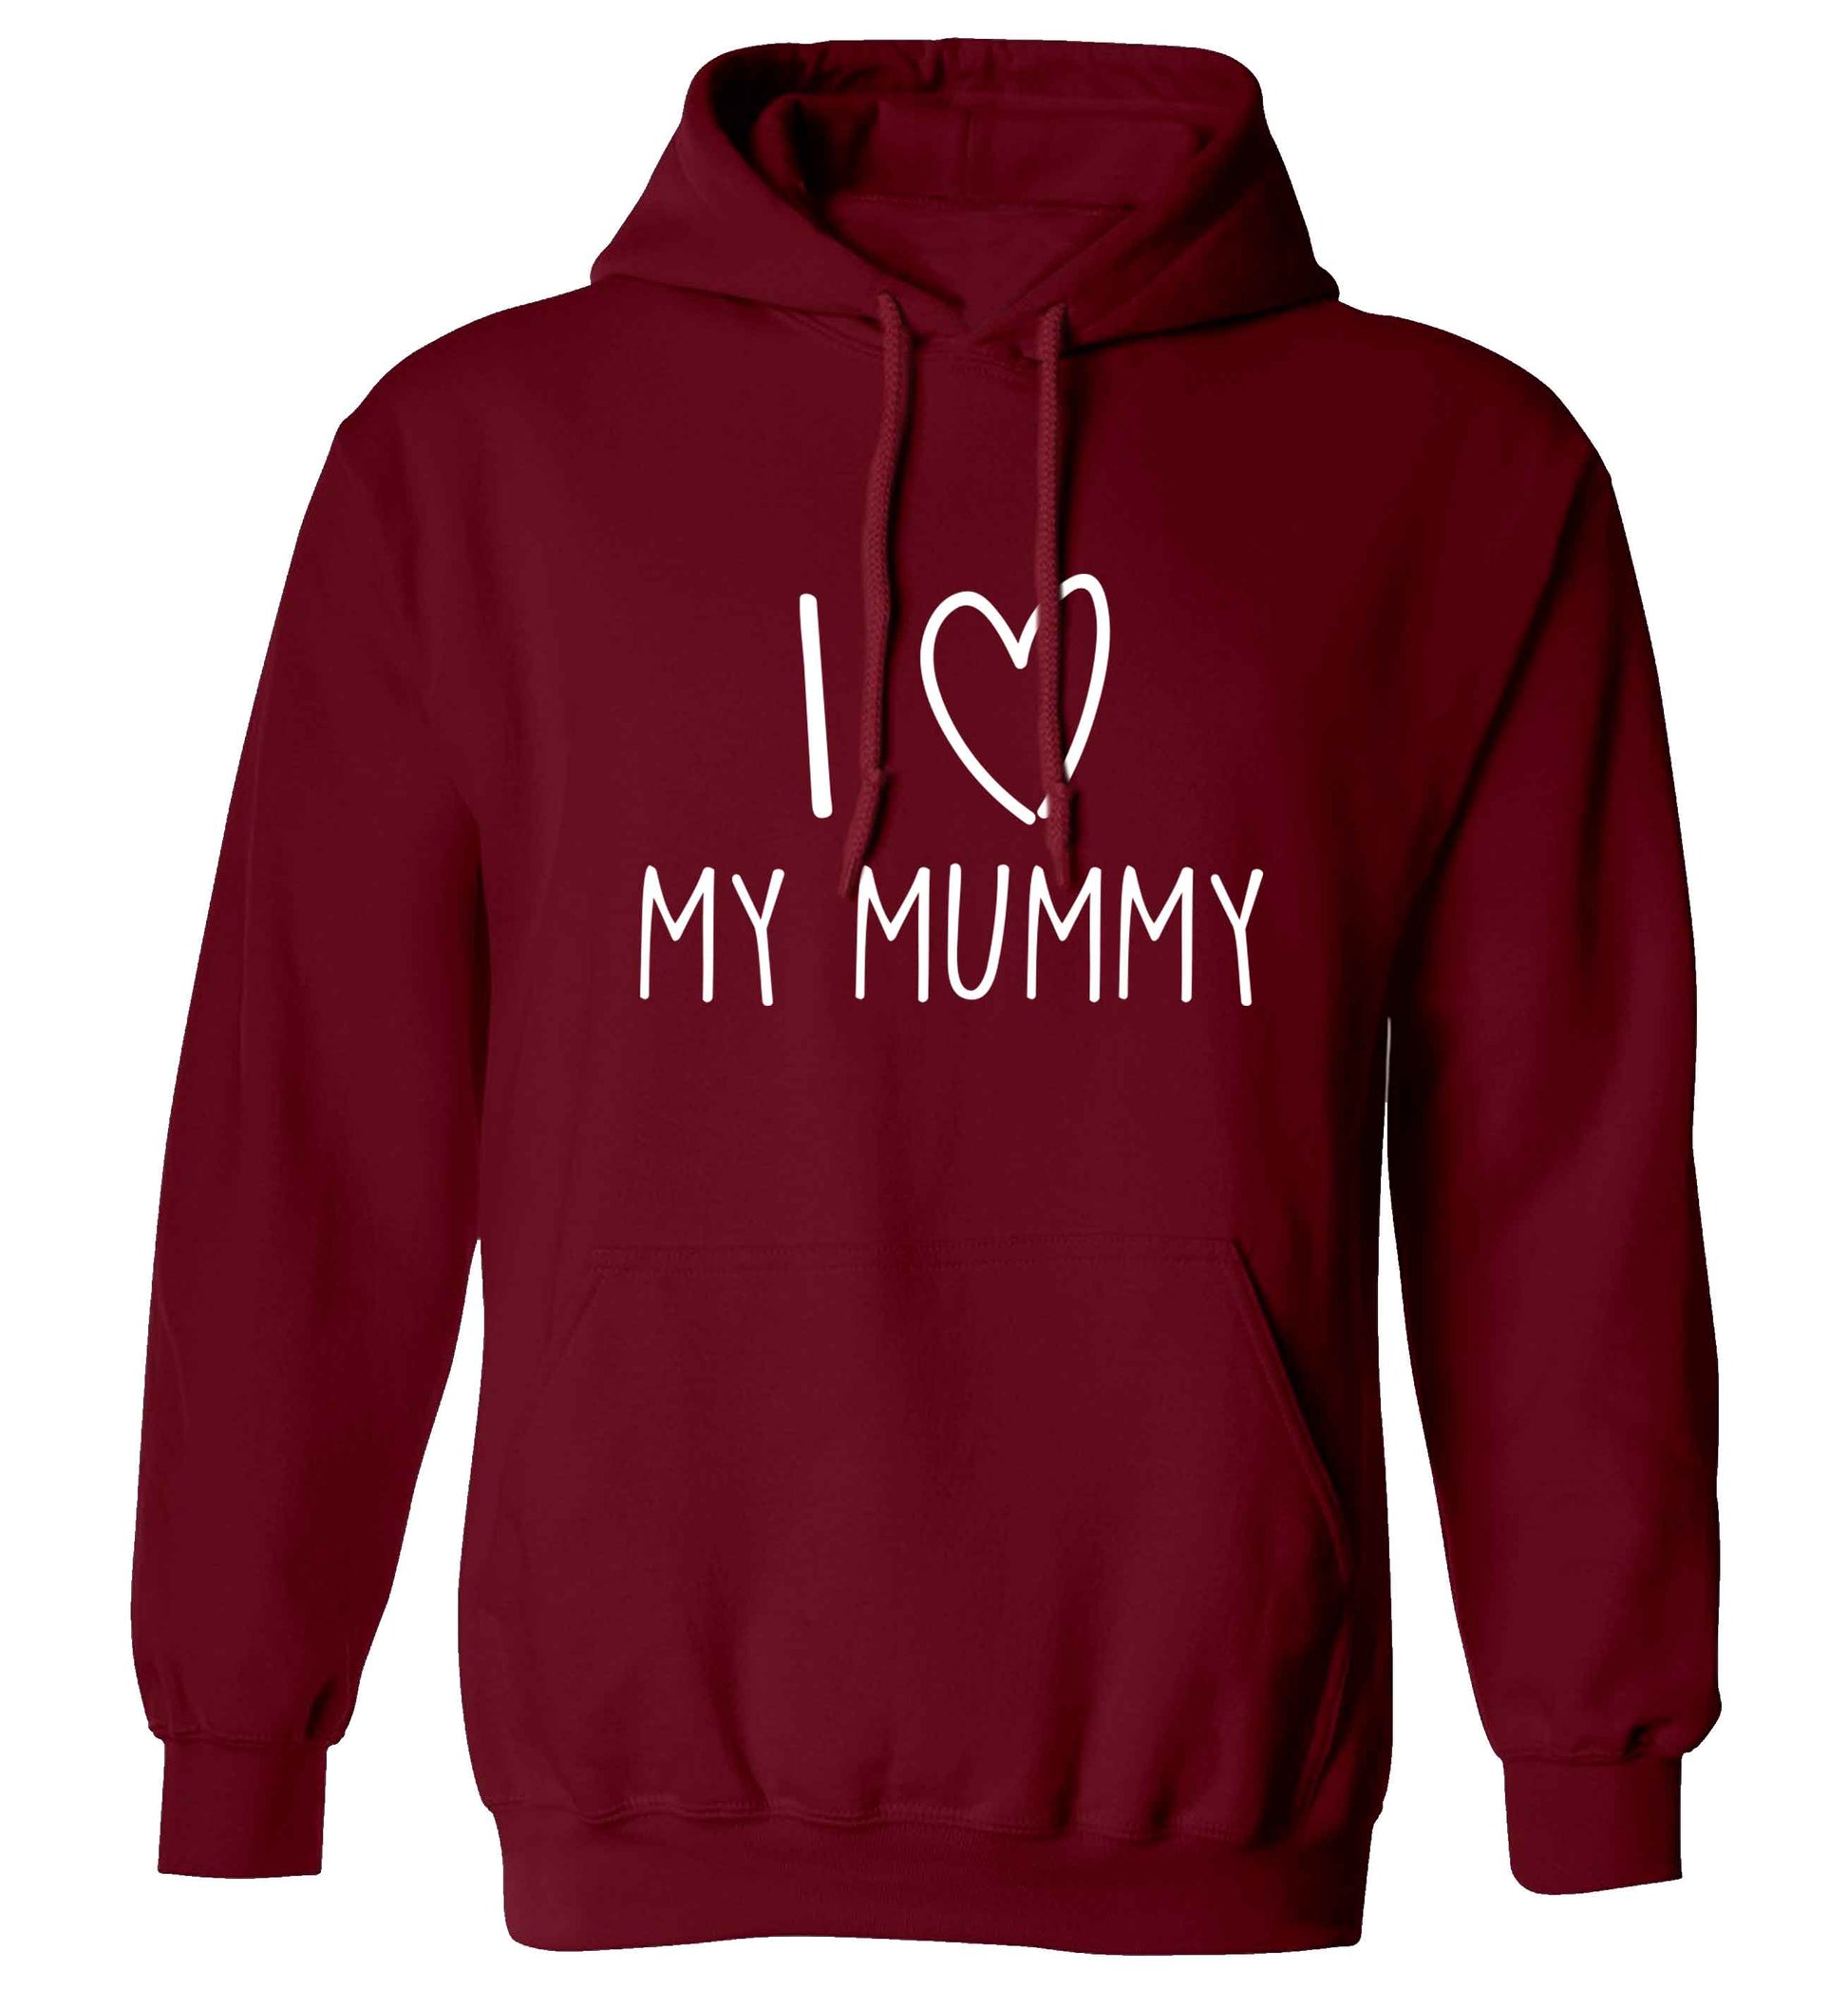 I love my mummy adults unisex maroon hoodie 2XL